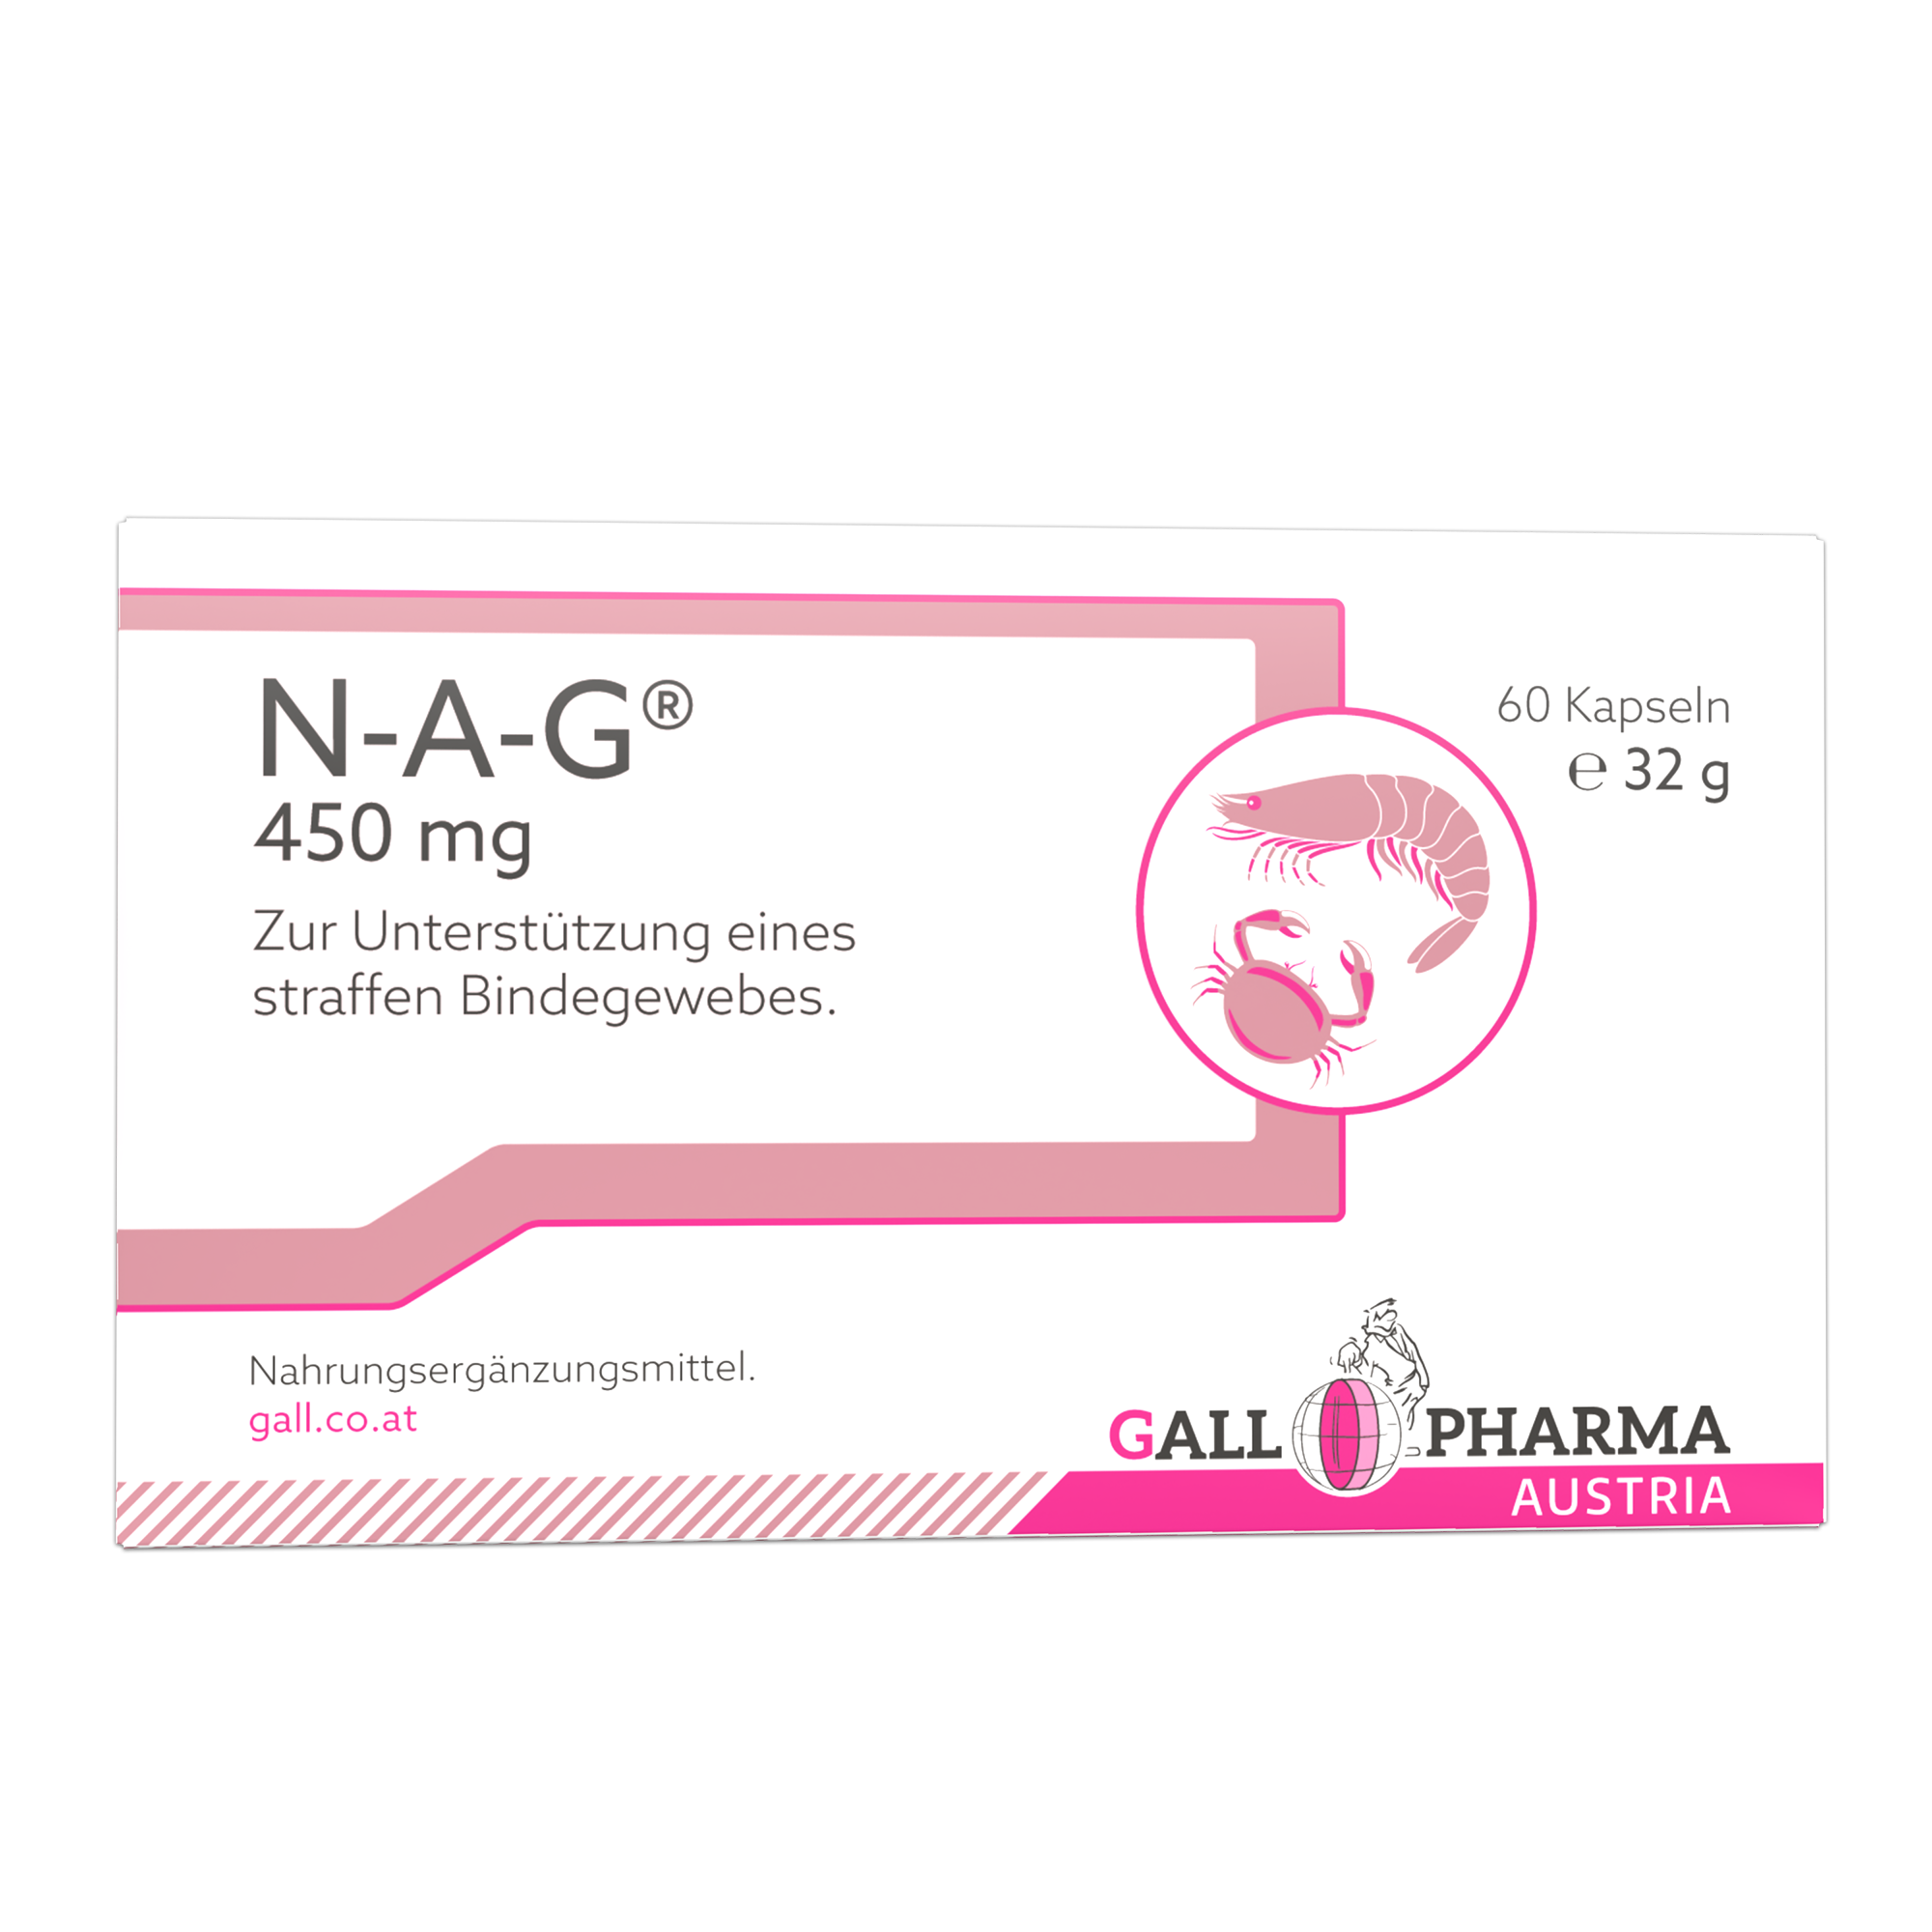 N-A-G 450 mg GPH Kapseln